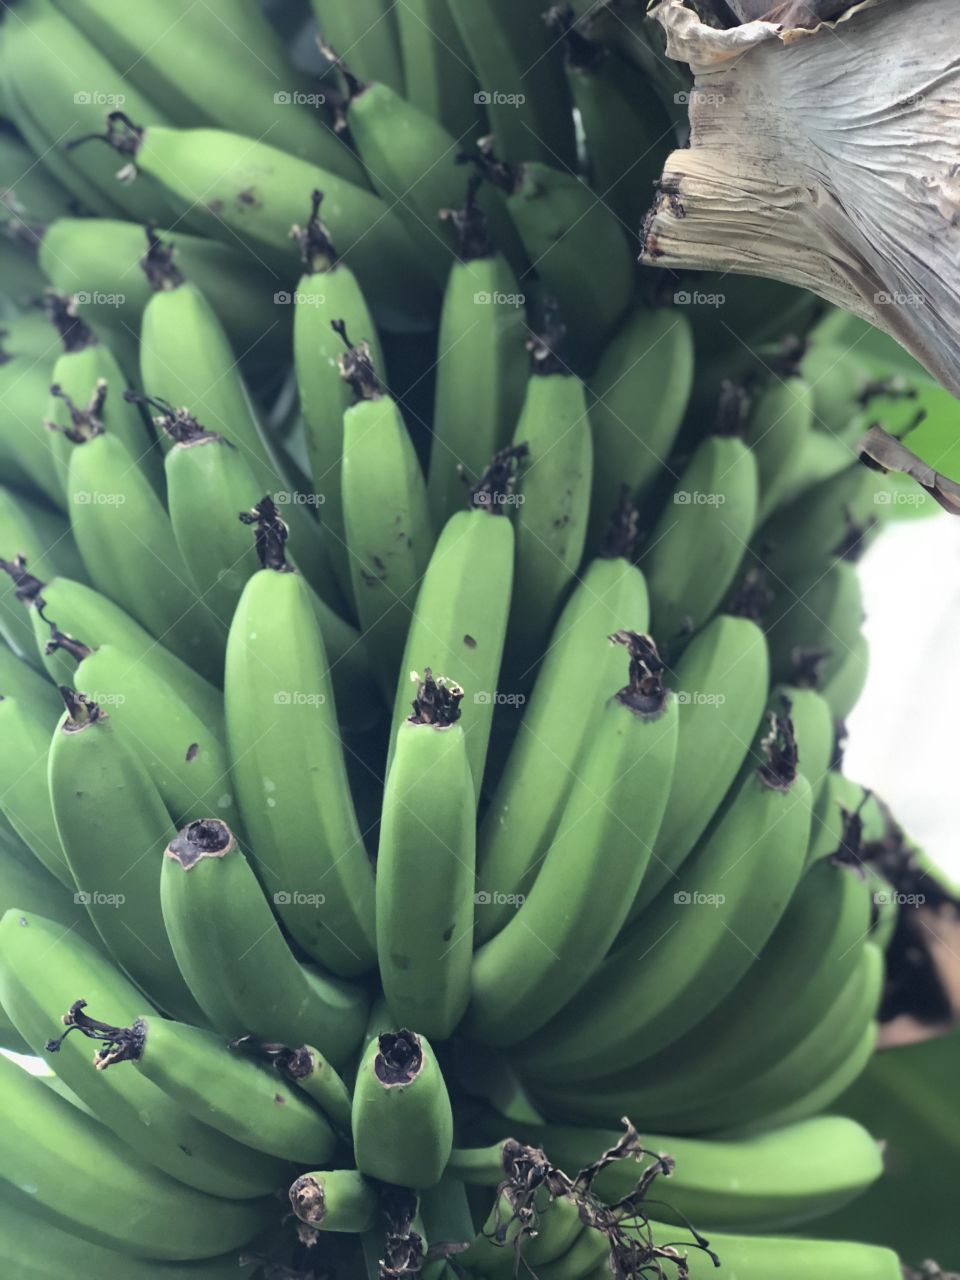 Group of Green bananas still on the tree 